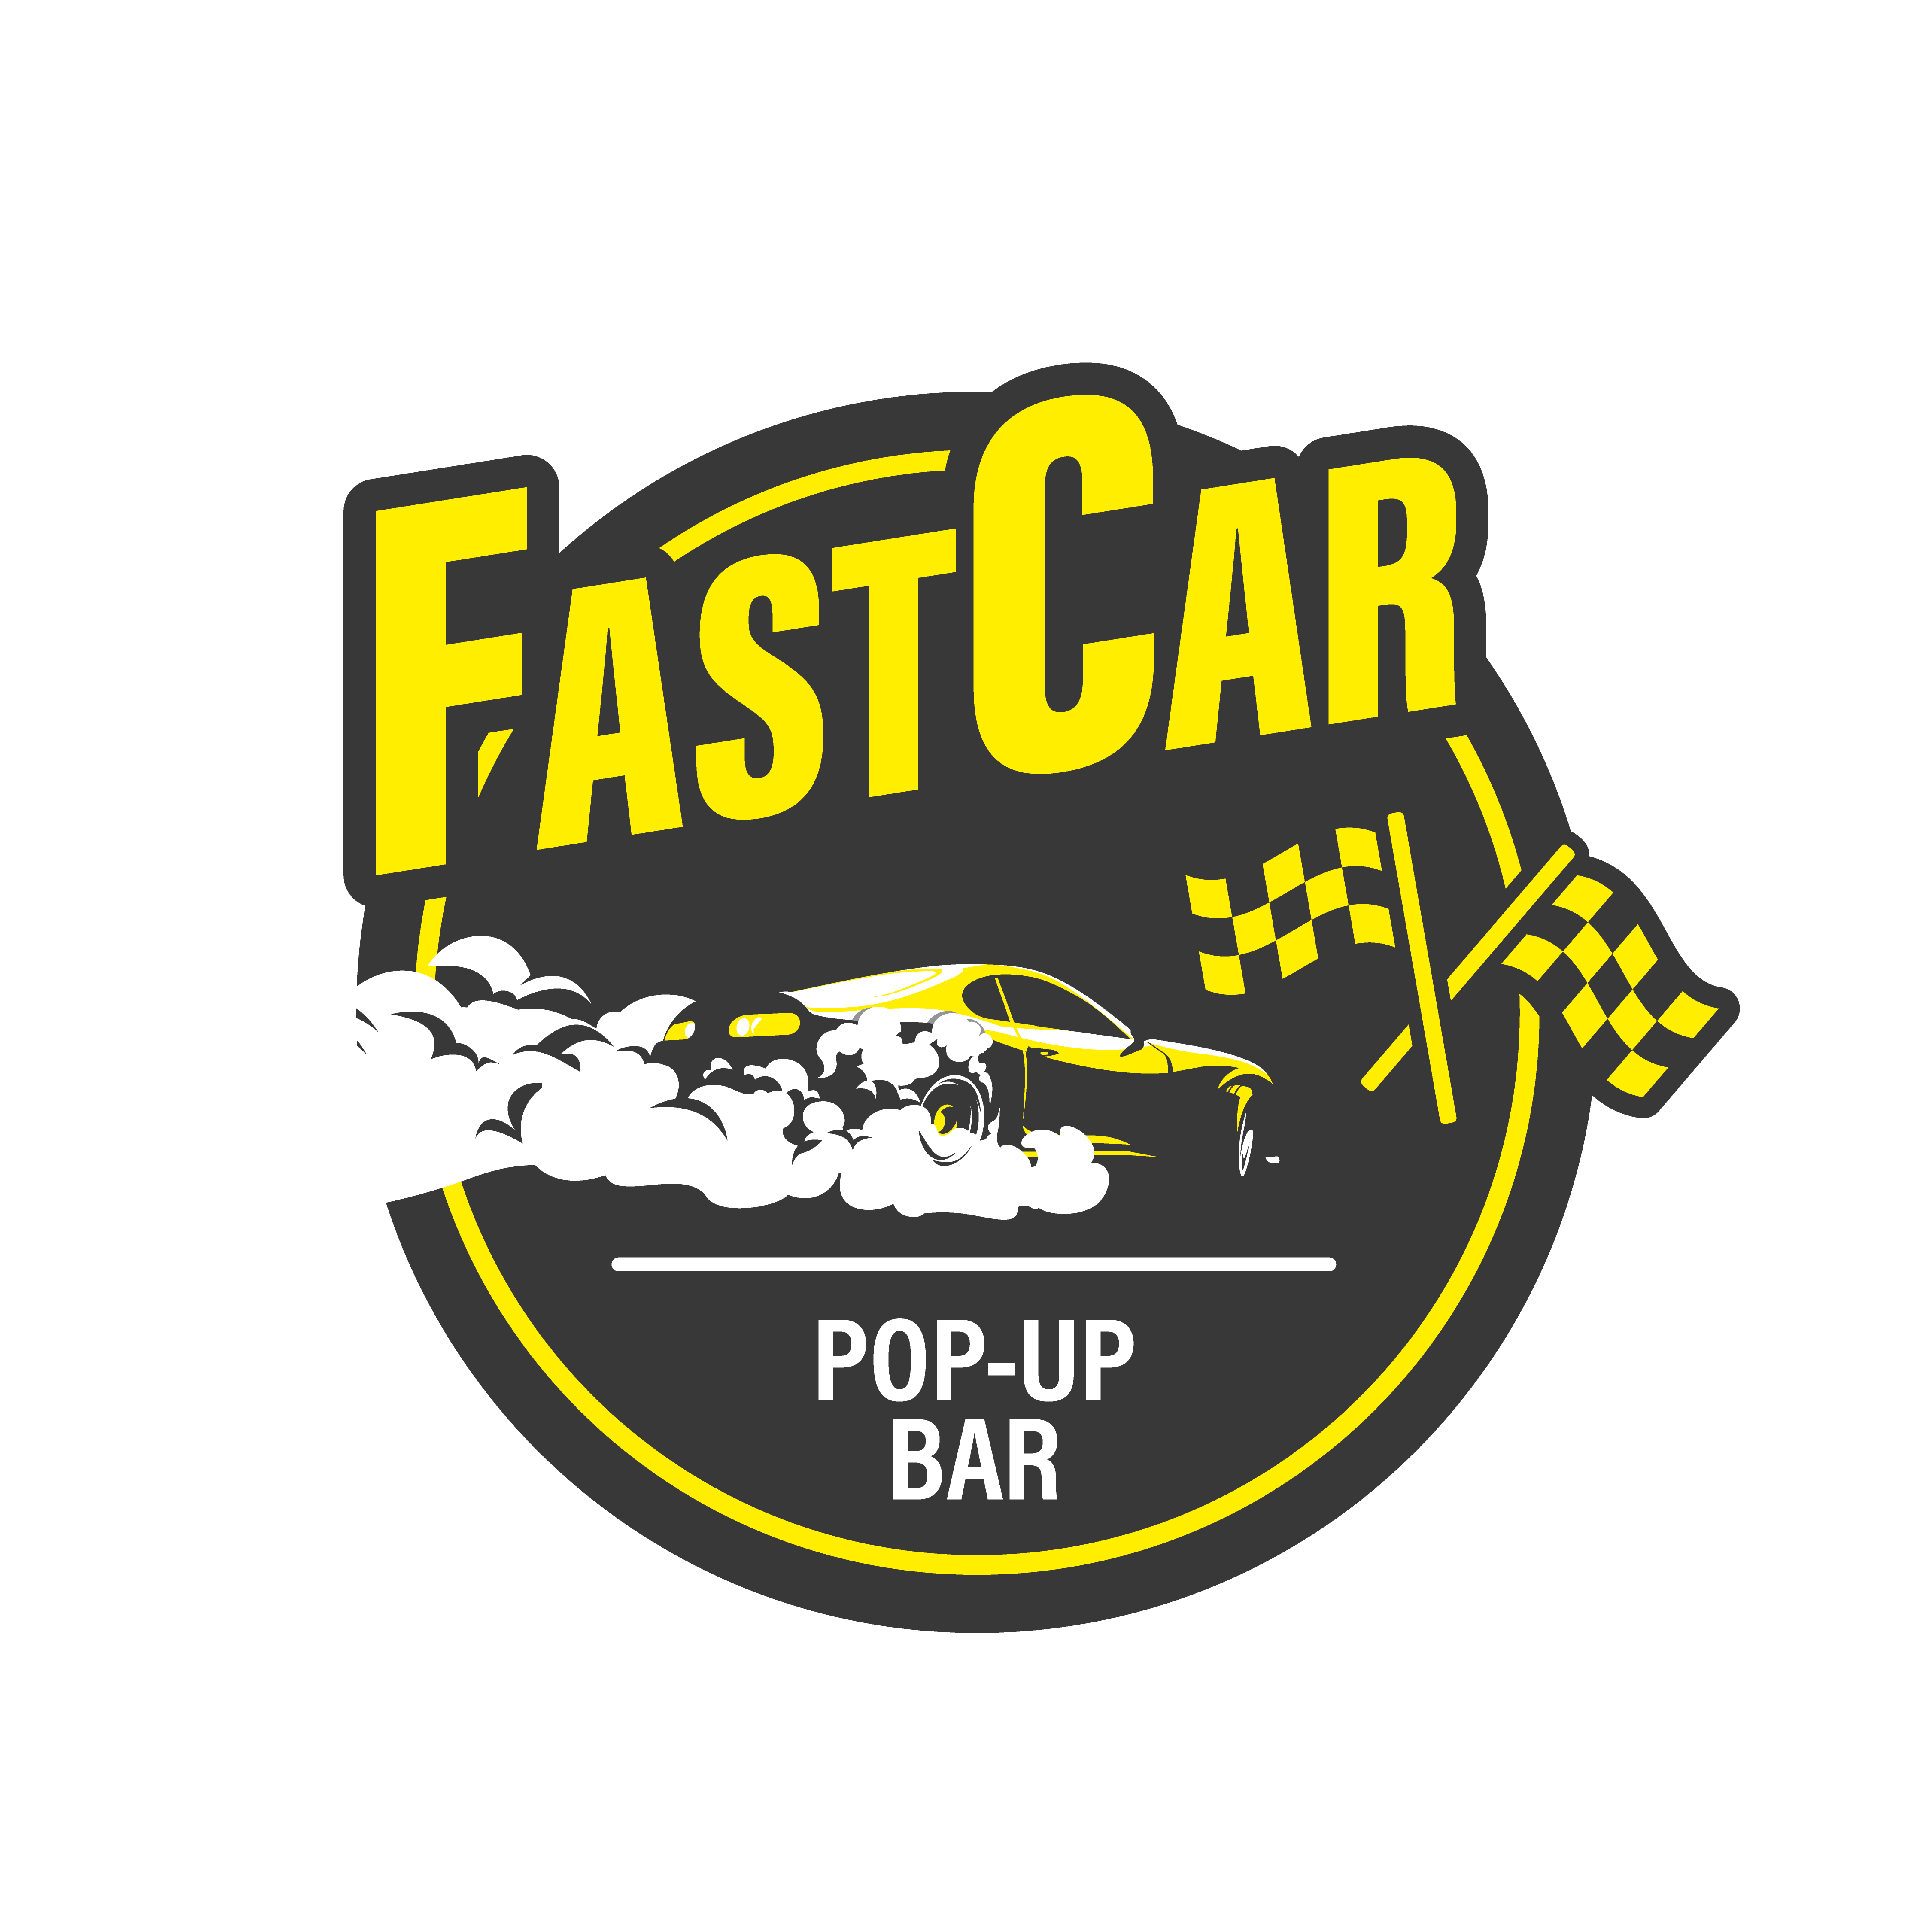 Fast Car Pop Up Bar